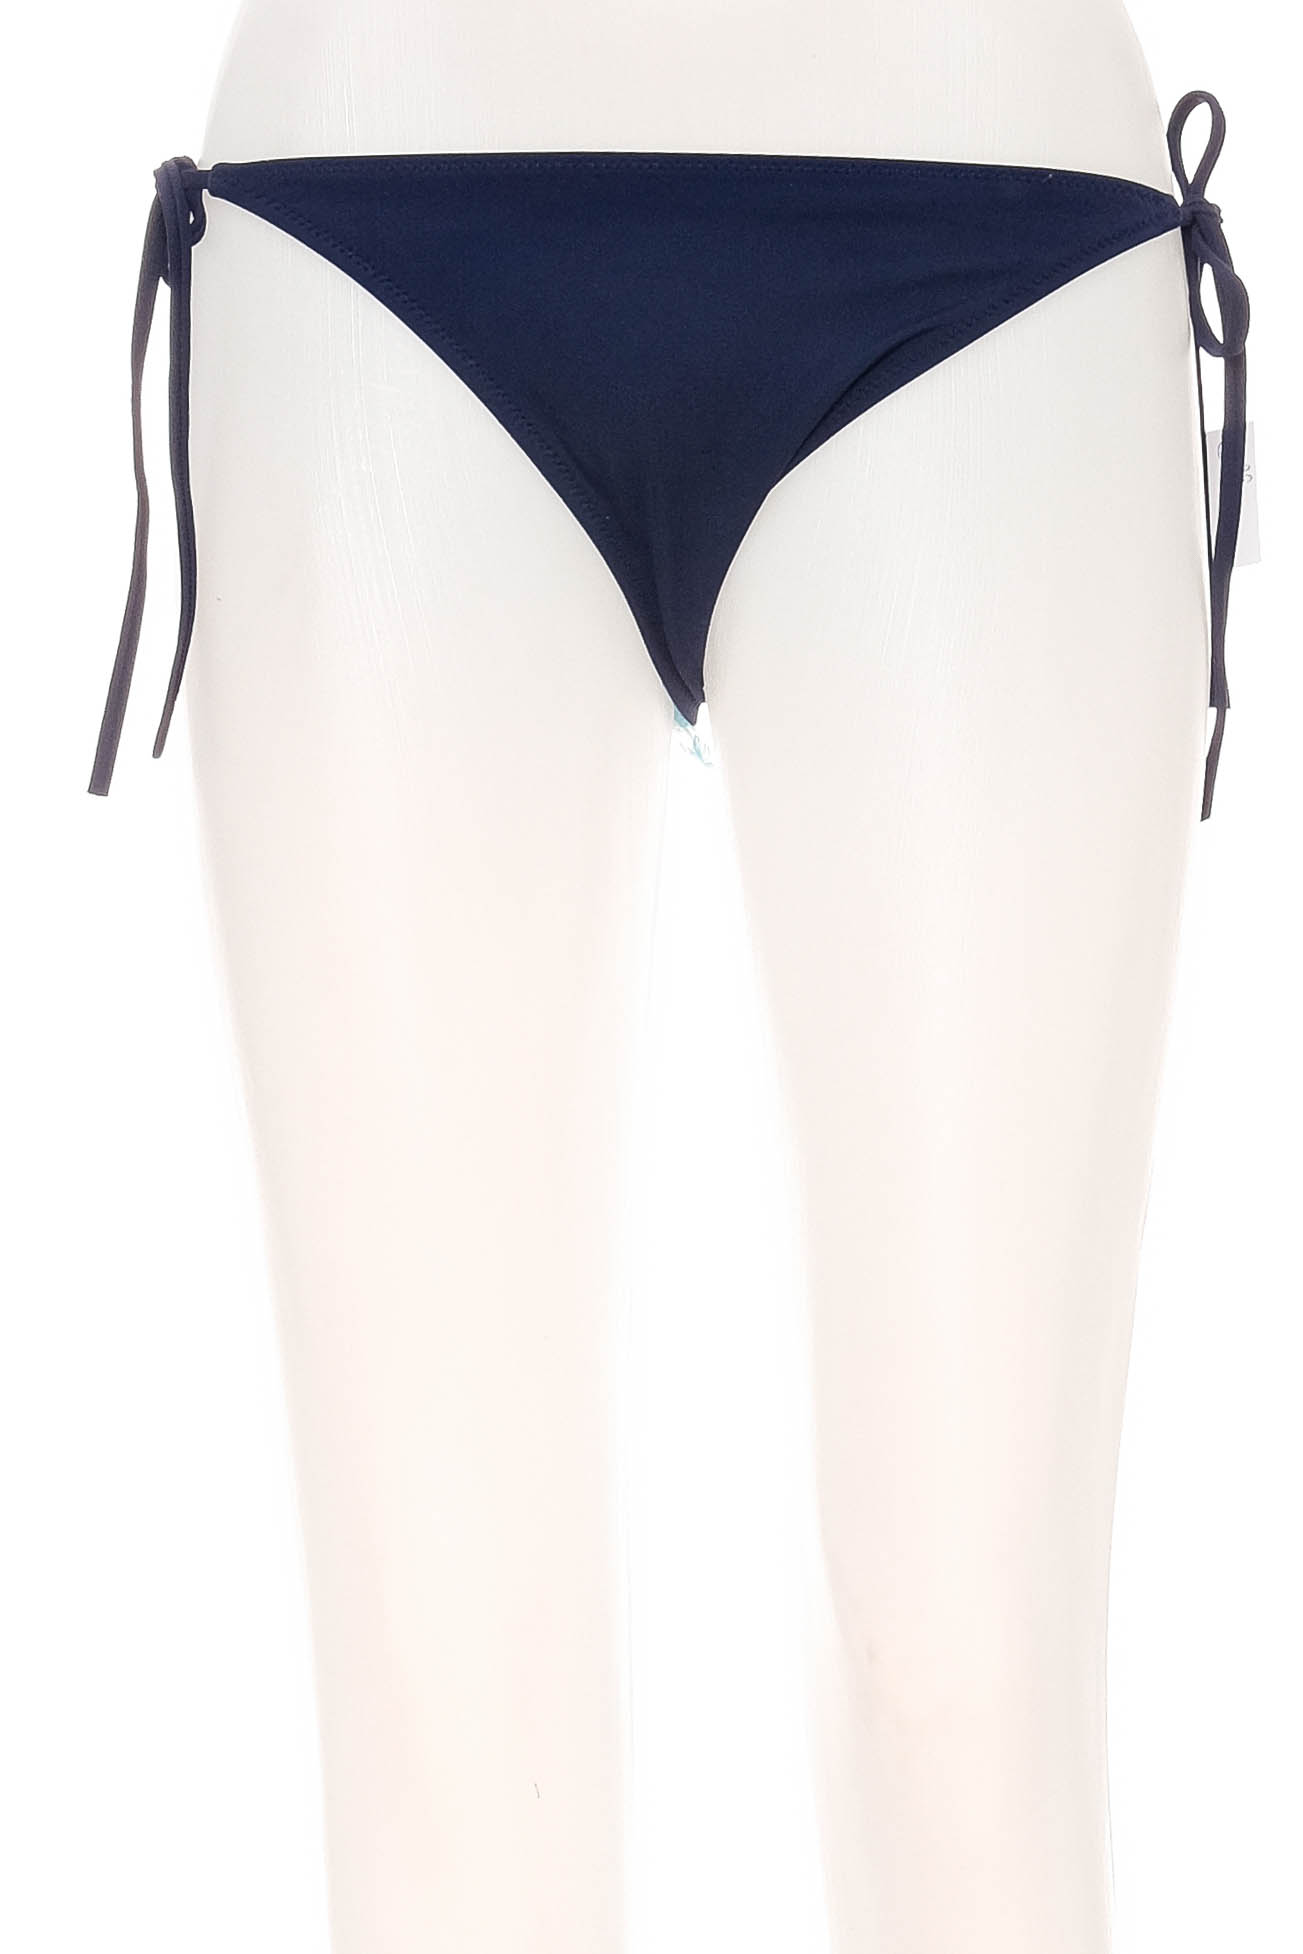 Women's swimsuit bottoms - Zalando essentials - 0